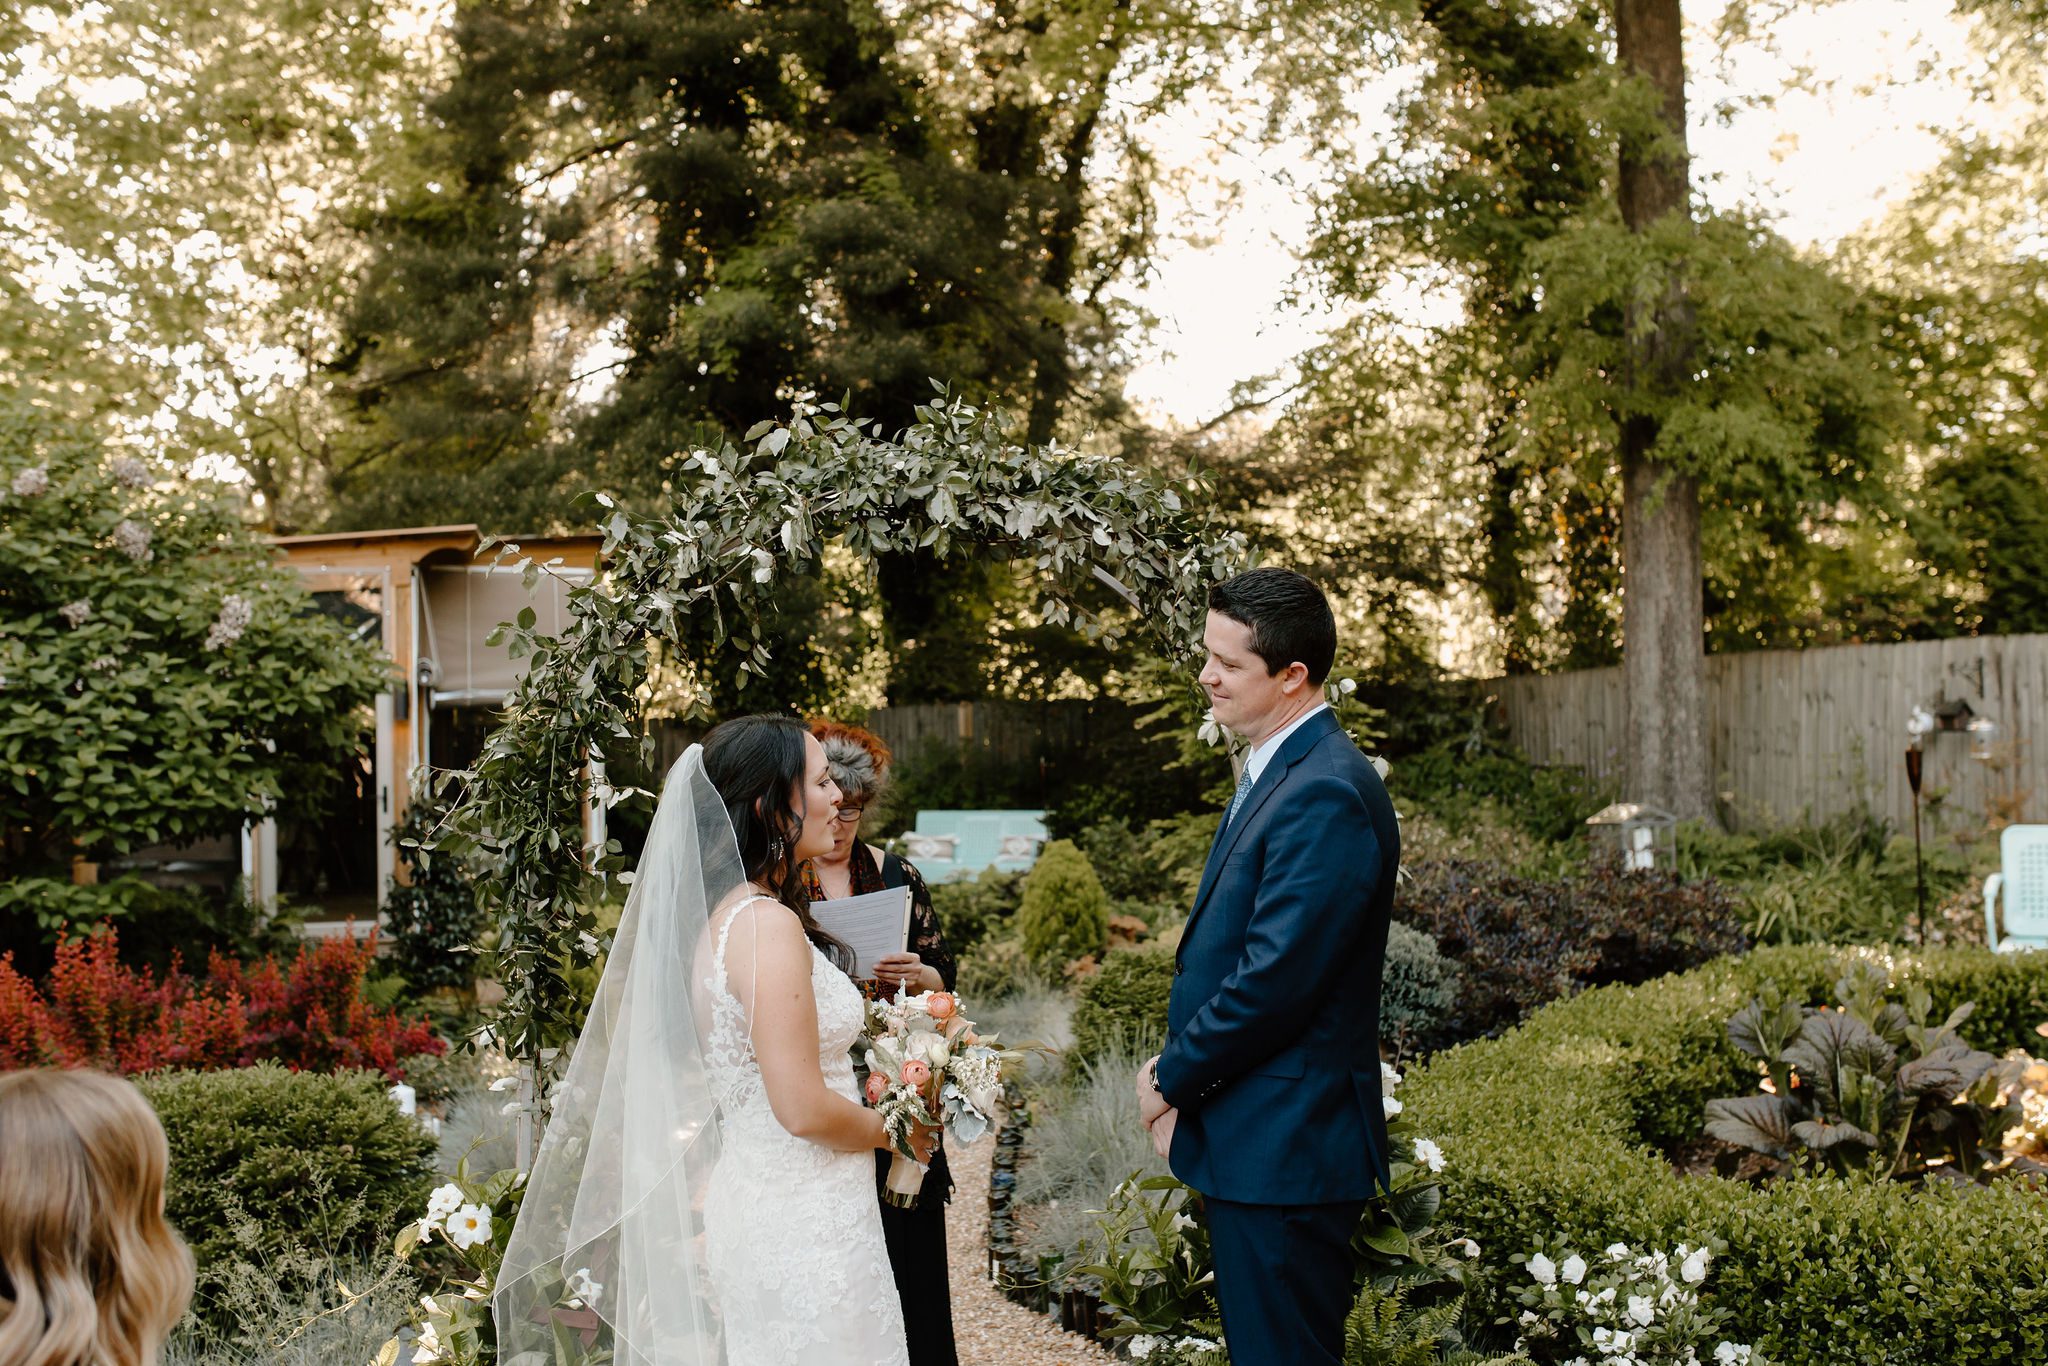 An Intimate Whimsical Backyard Garden Wedding